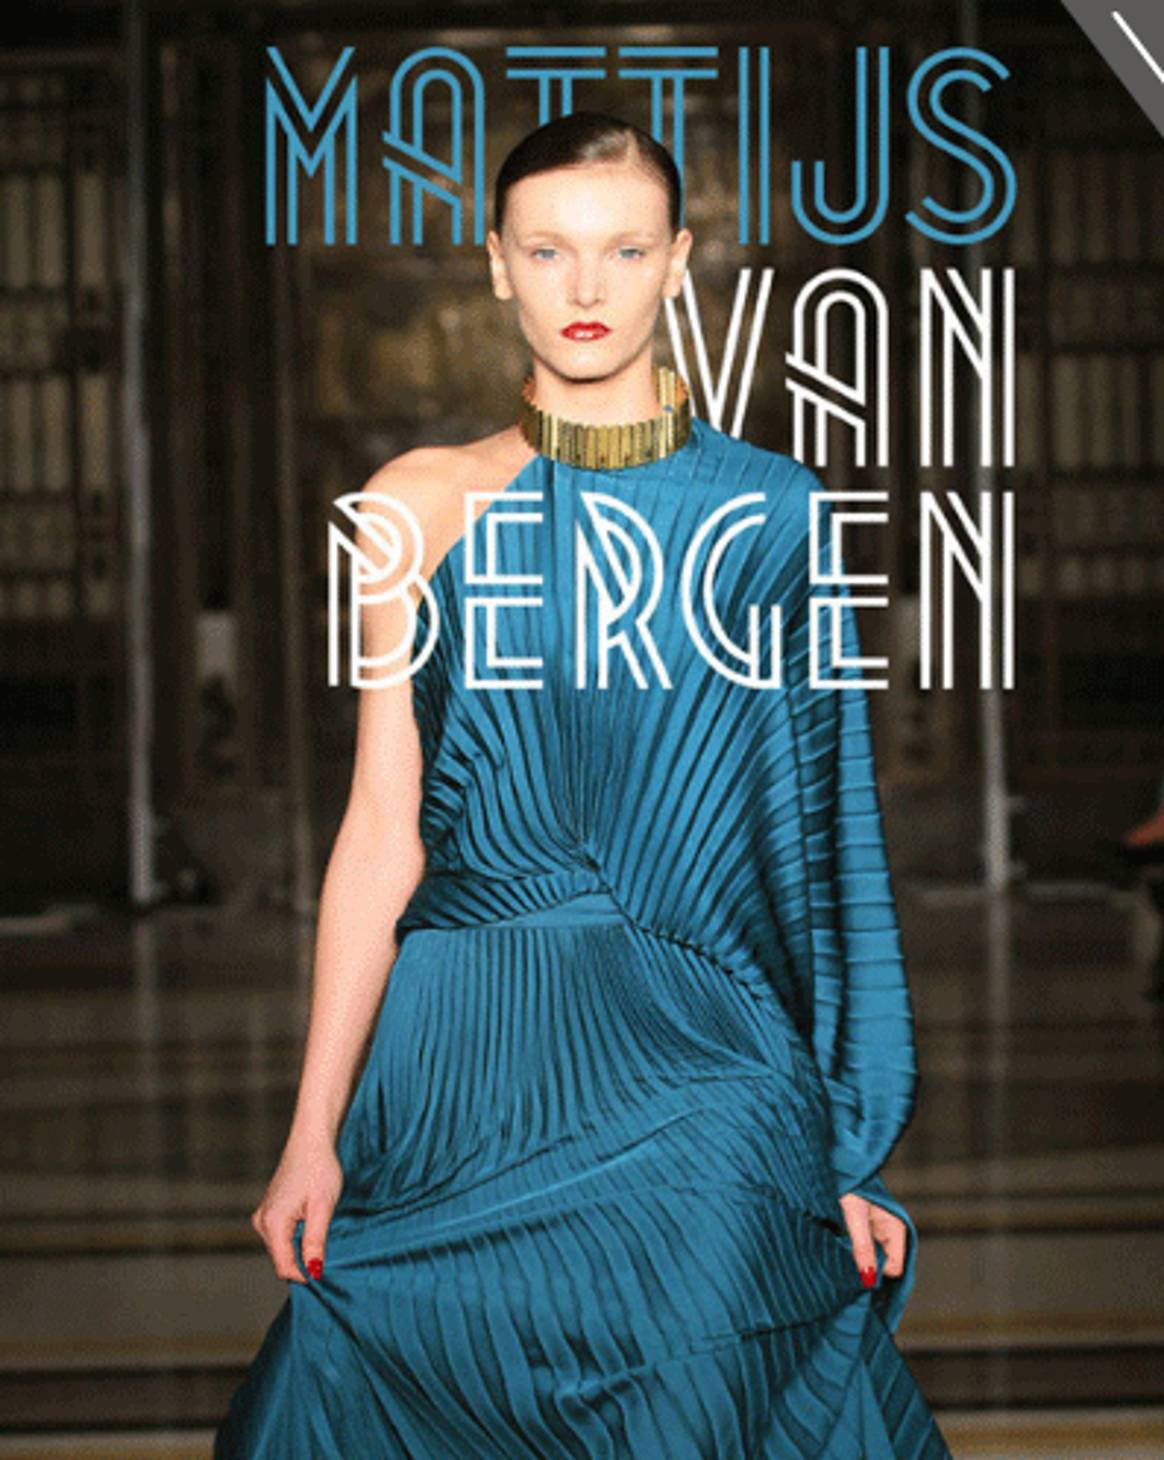 Mattijs winnaar Dutch Fashion Awards 2012